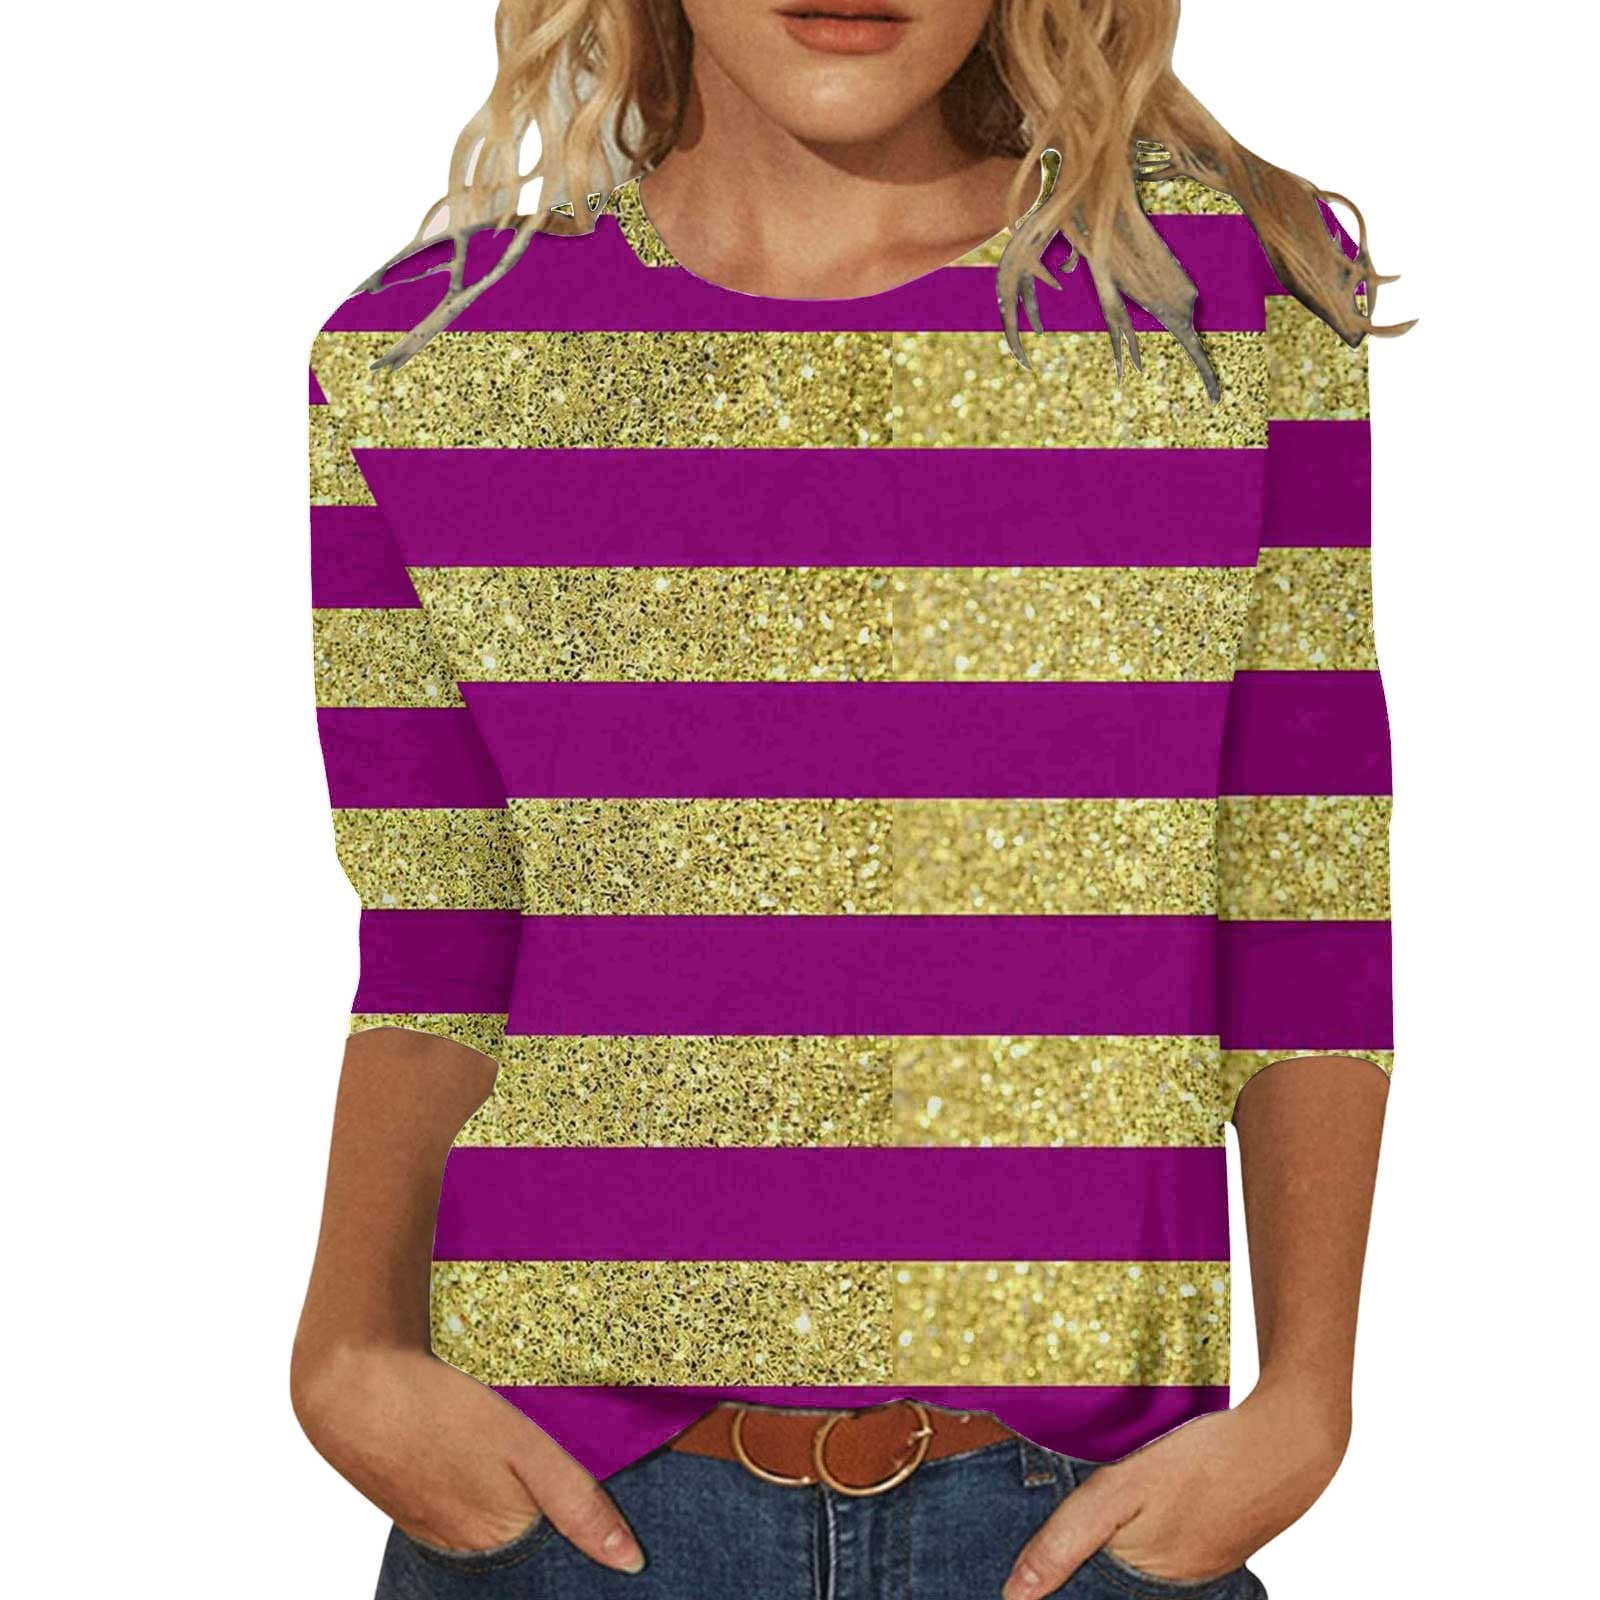 EHQJNJ Cut Out Tops for Women Women's T Shirt Carnival 3/4 Sleeve Shirt ...